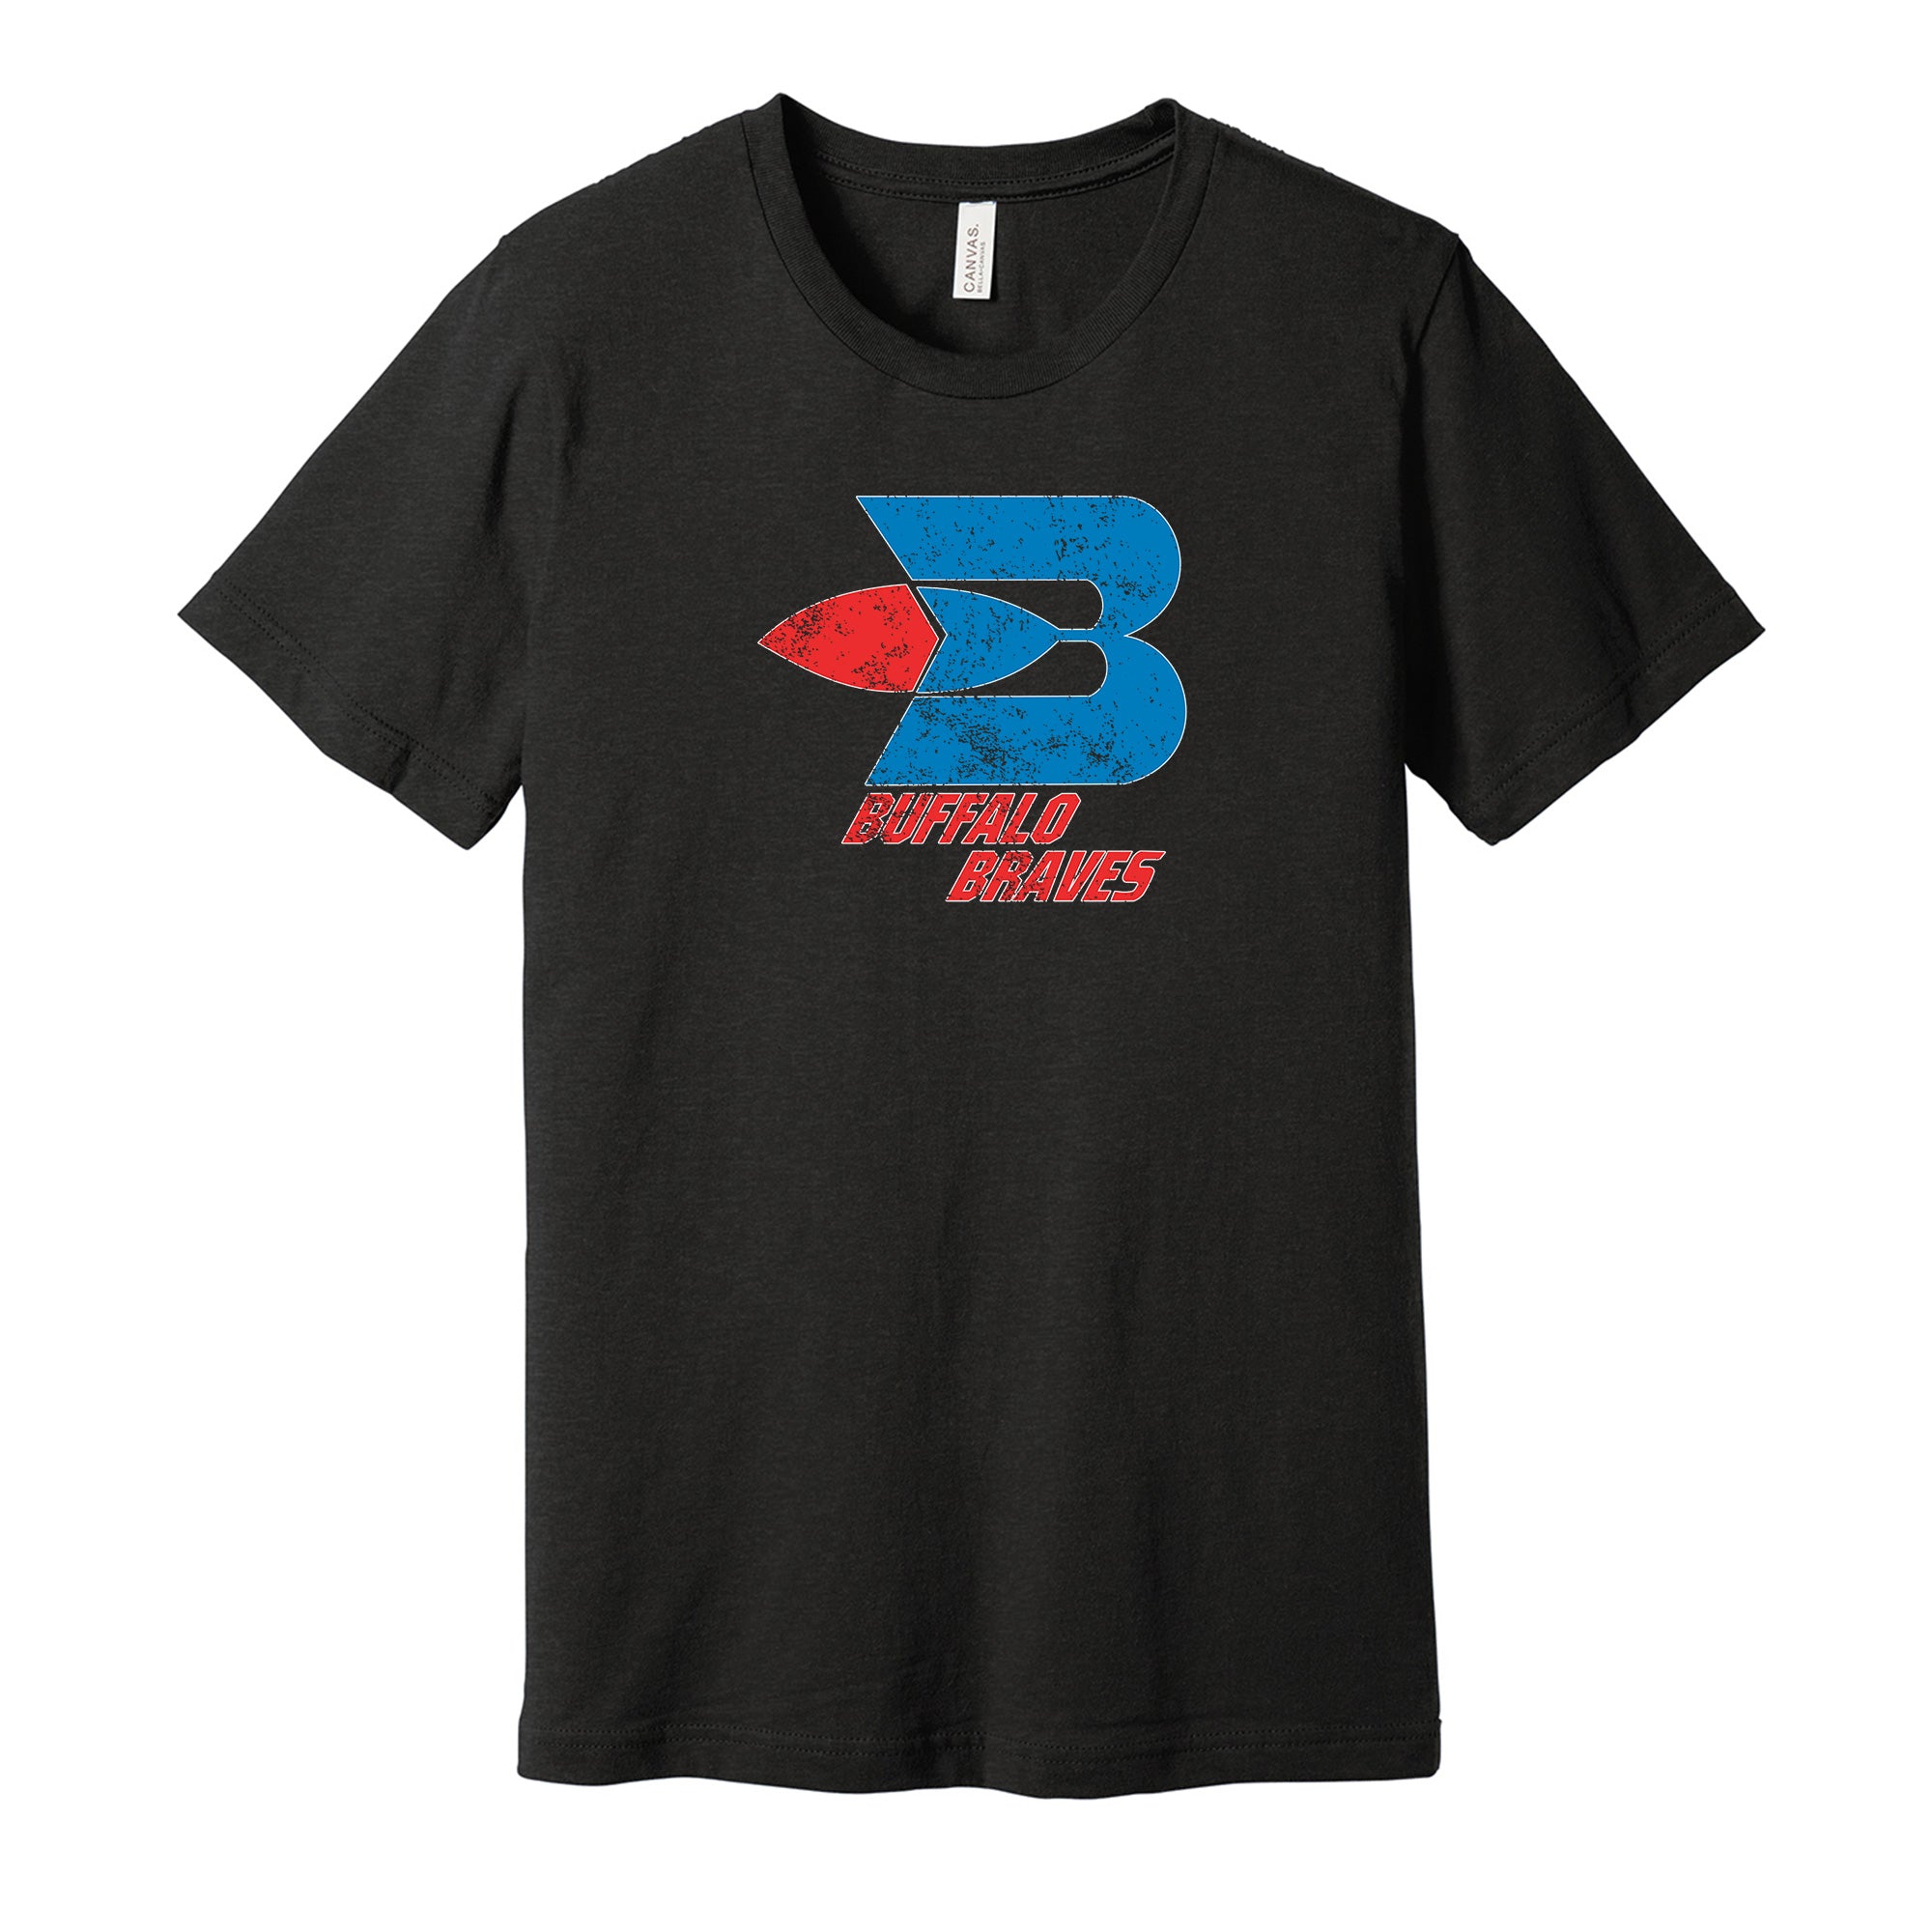 Vintage Buffalo Braves 70's Retro Basketball T Shirt Orange with Black  Letters L